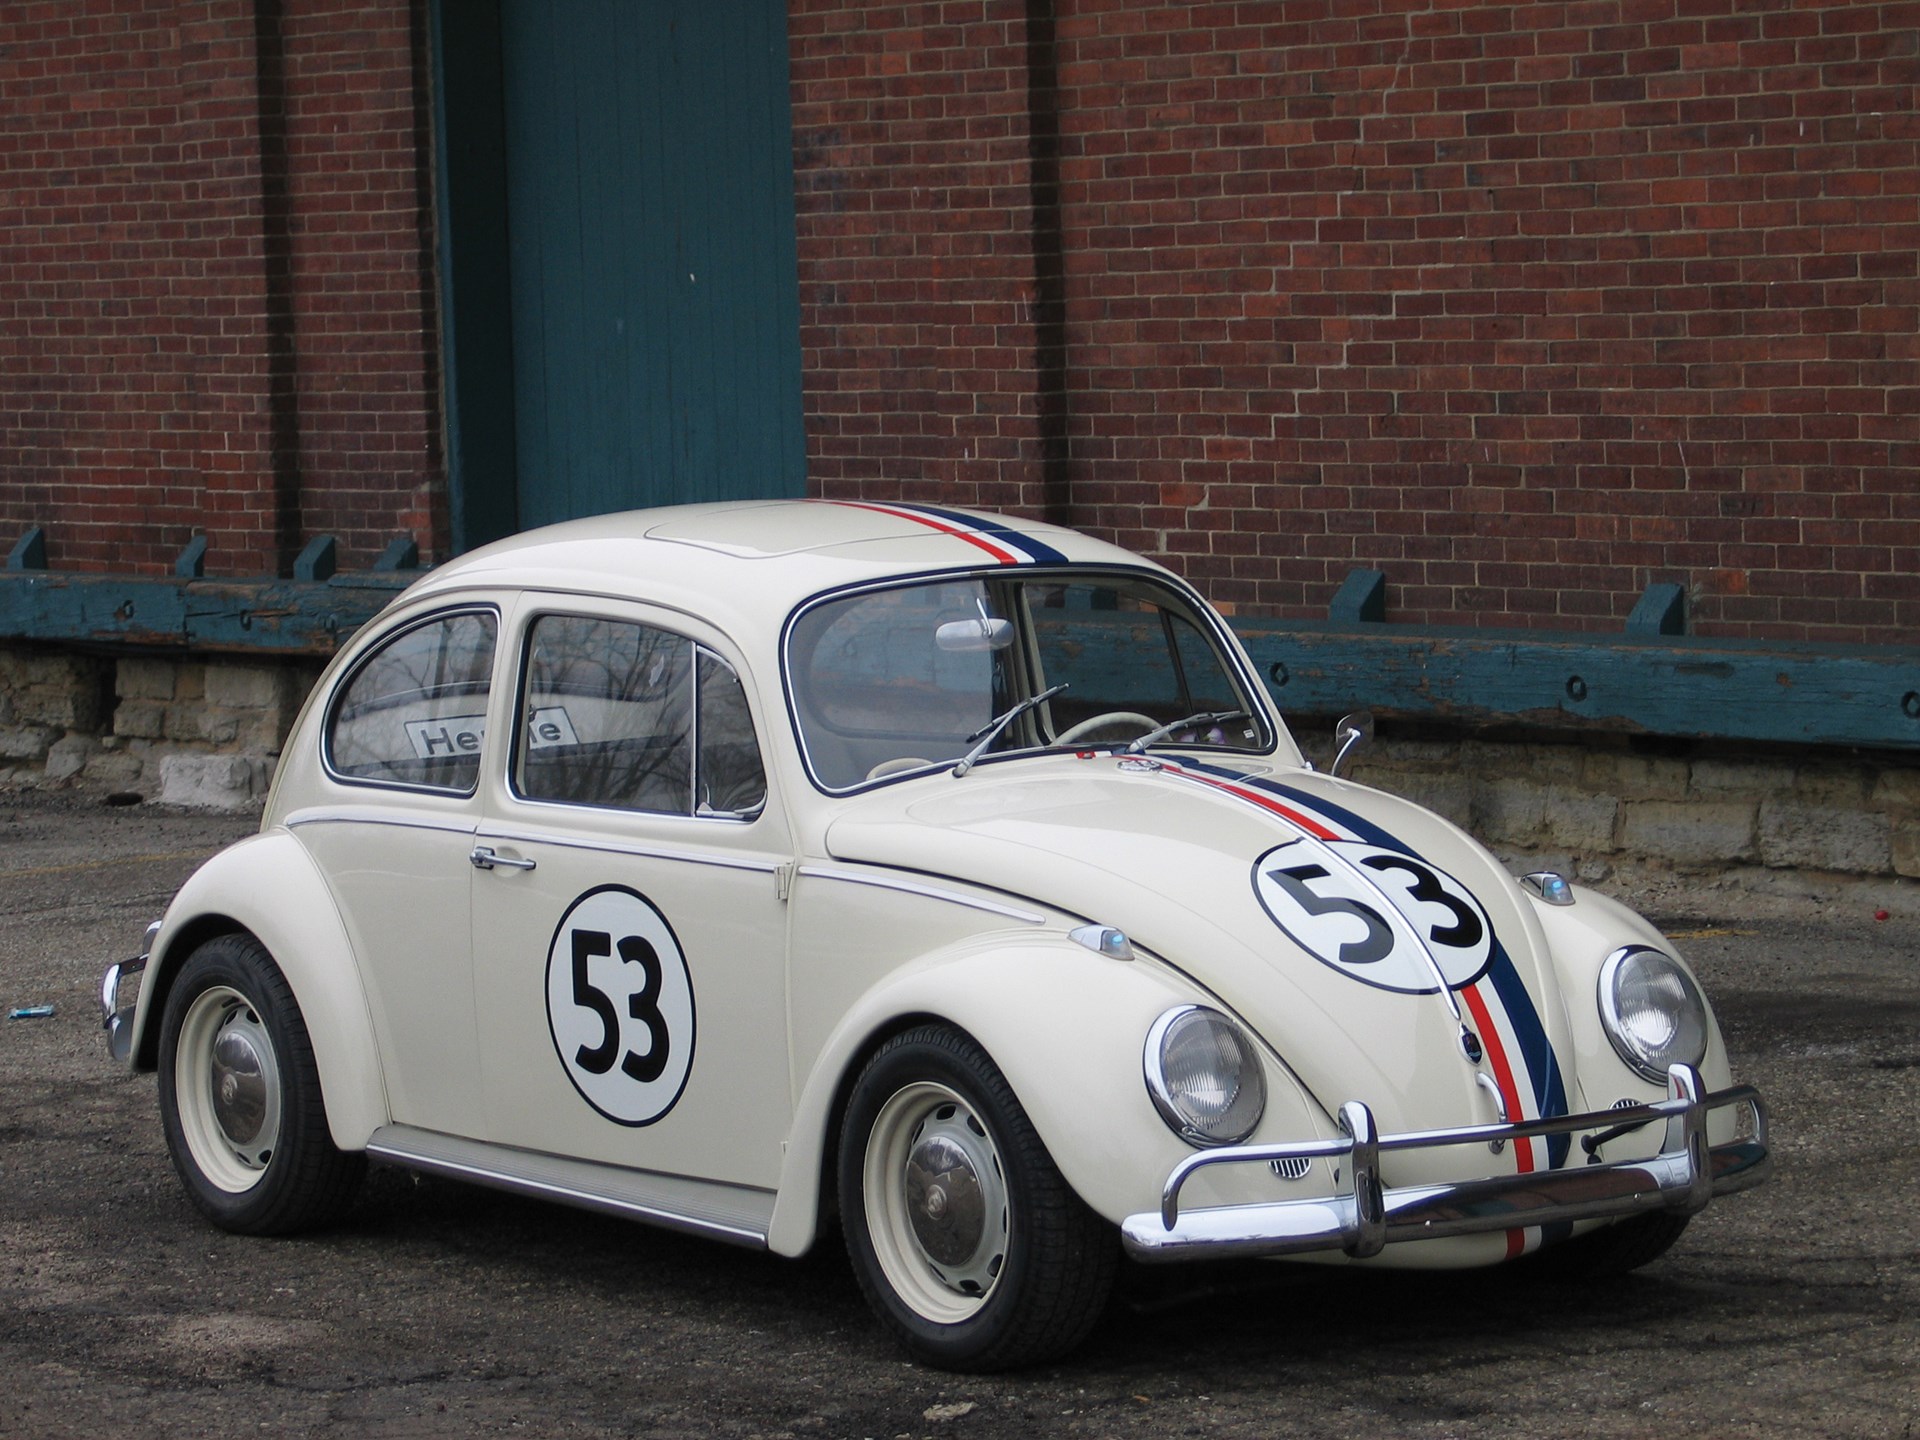 1967 Volkswagen Herbie The Love Bug Replica - Herbie The Love Bug For Sale , HD Wallpaper & Backgrounds